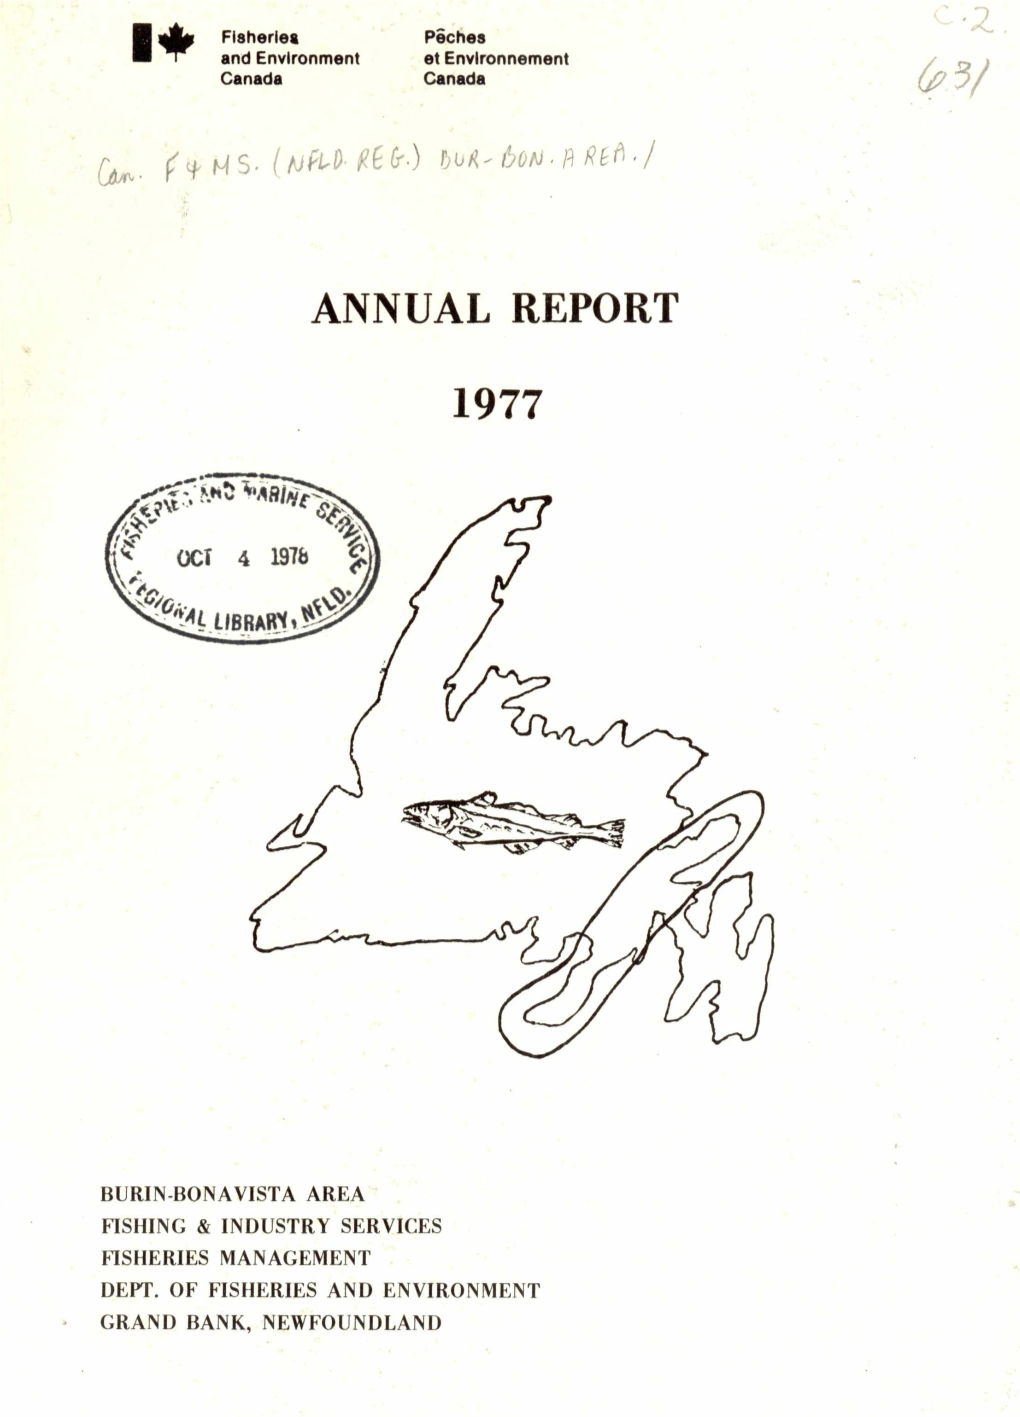 1977 Annual Report